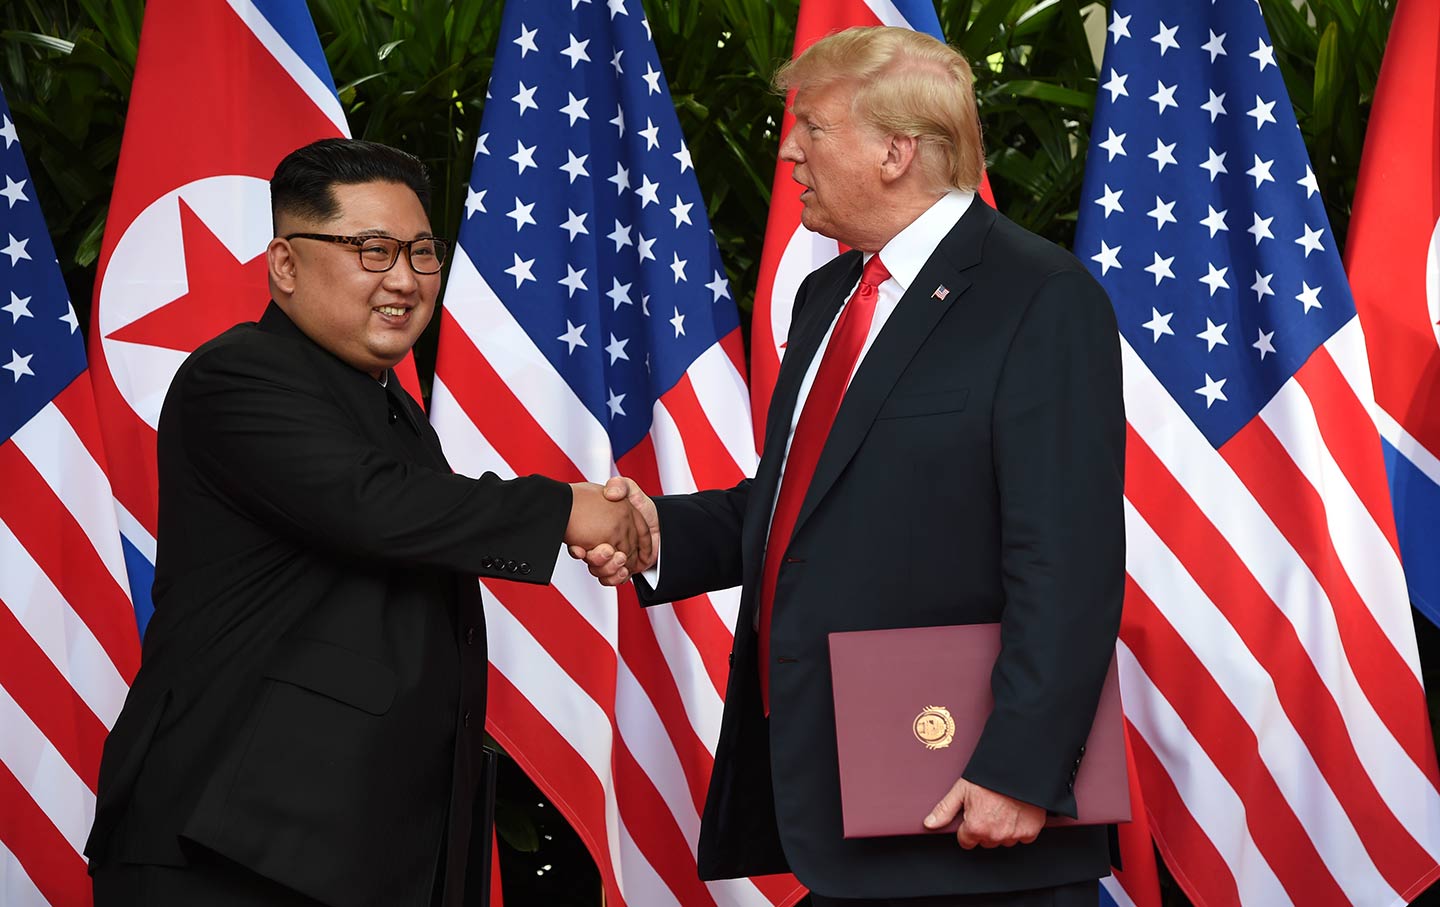 Trump Kim hand shake